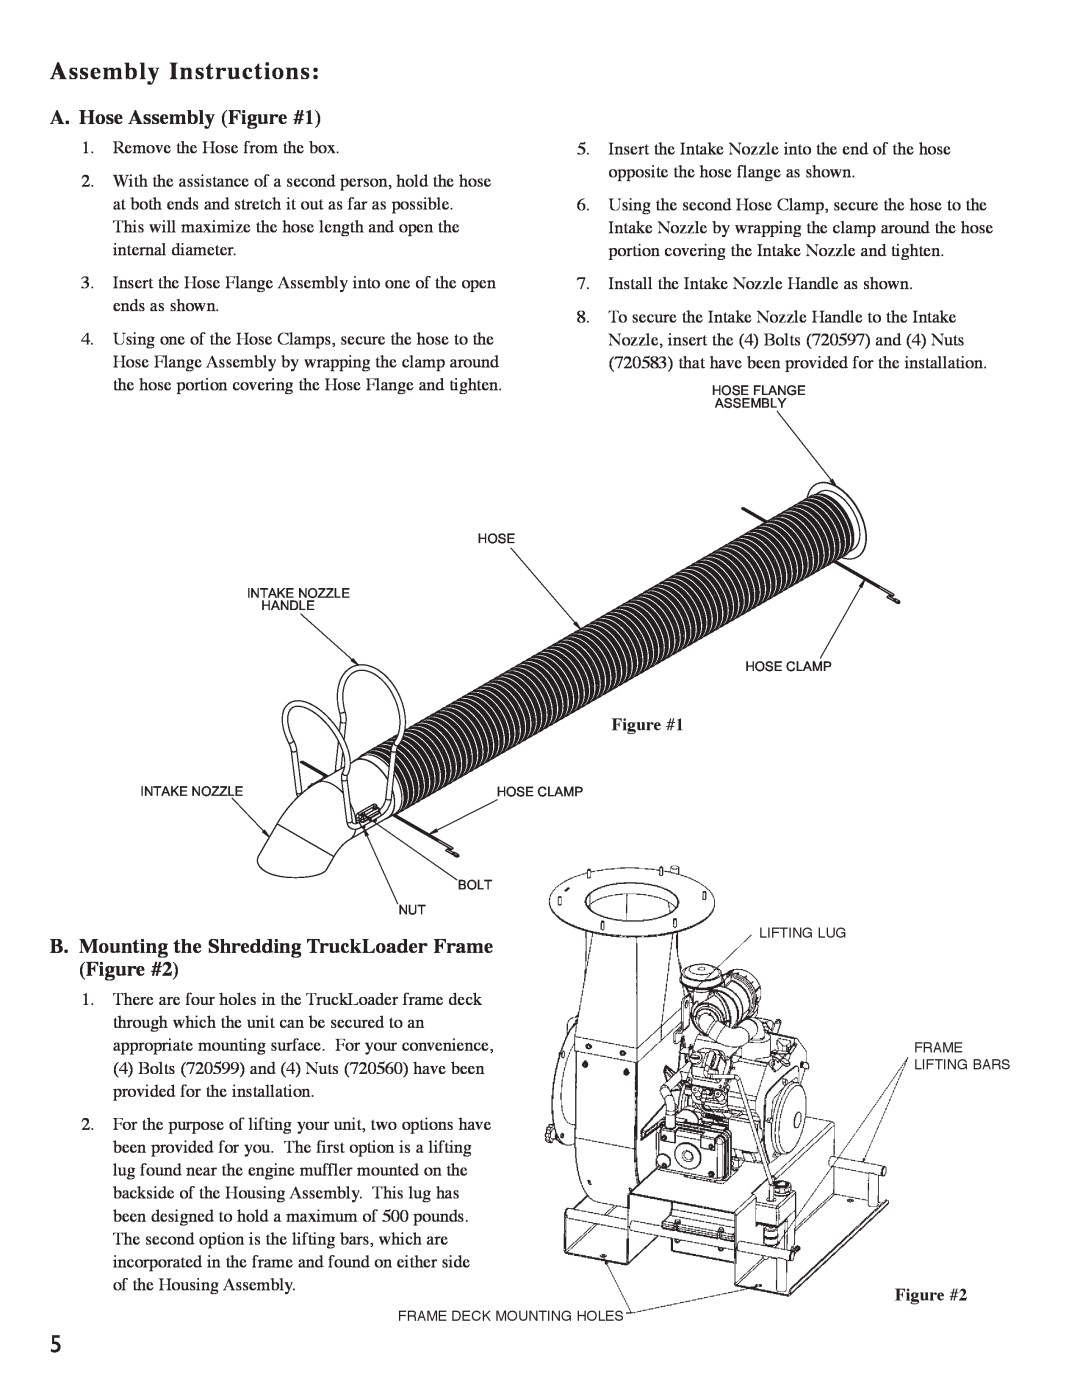 Little Wonder 8221, 8271 manual Assembly Instructions, A. Hose Assembly Figure #1 